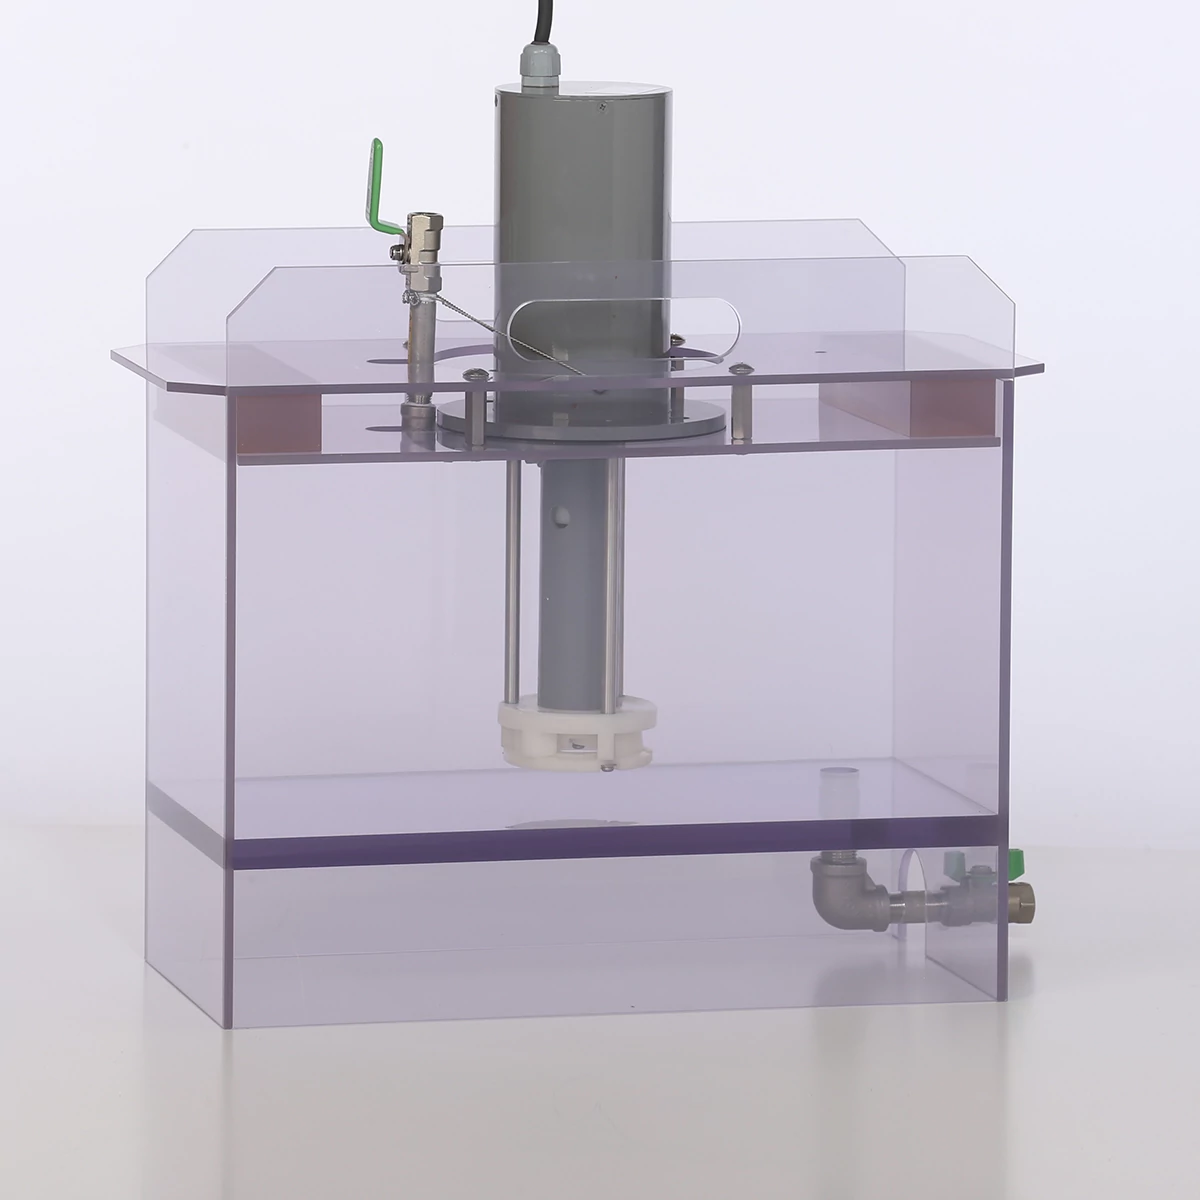 acniti microstar generador de nanoburbujas fs302 en tanque de agua